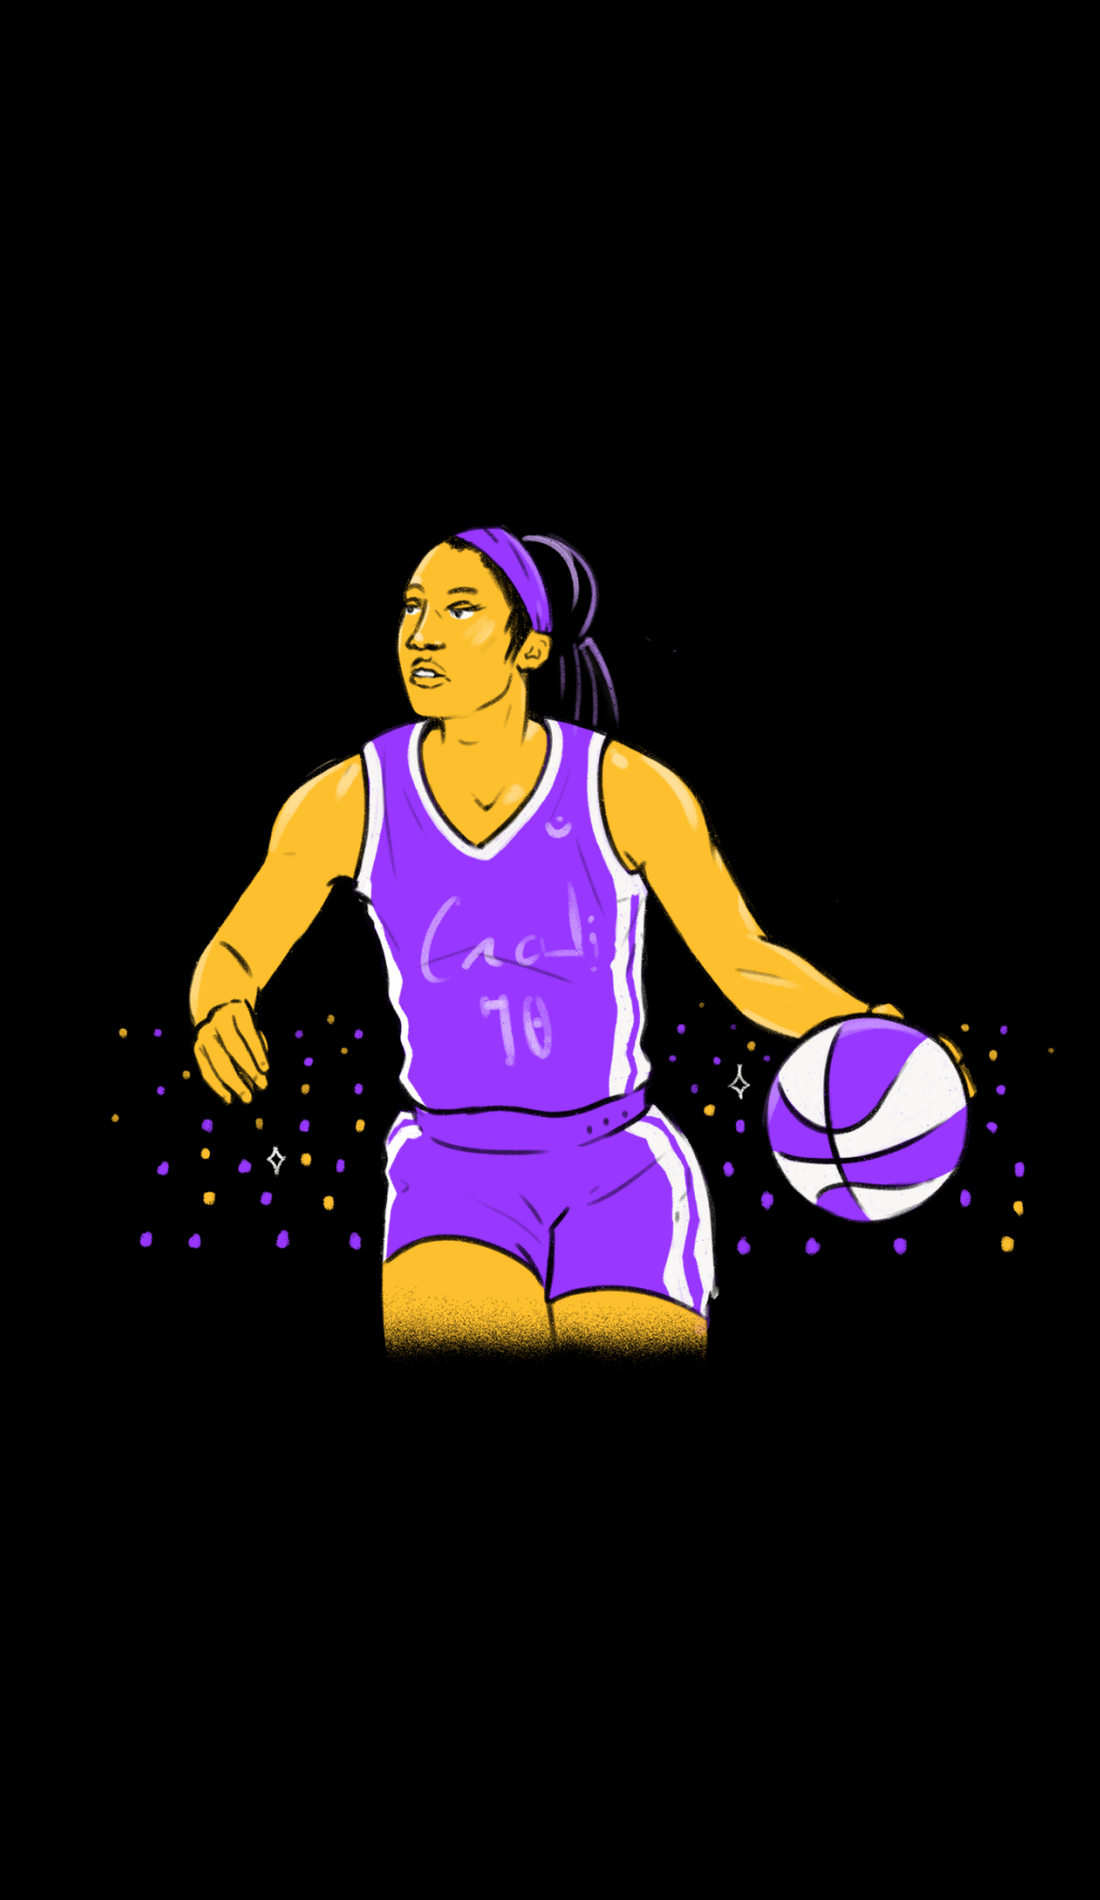 A LA Lafayette Ragin Cajuns Womens Basketball live event